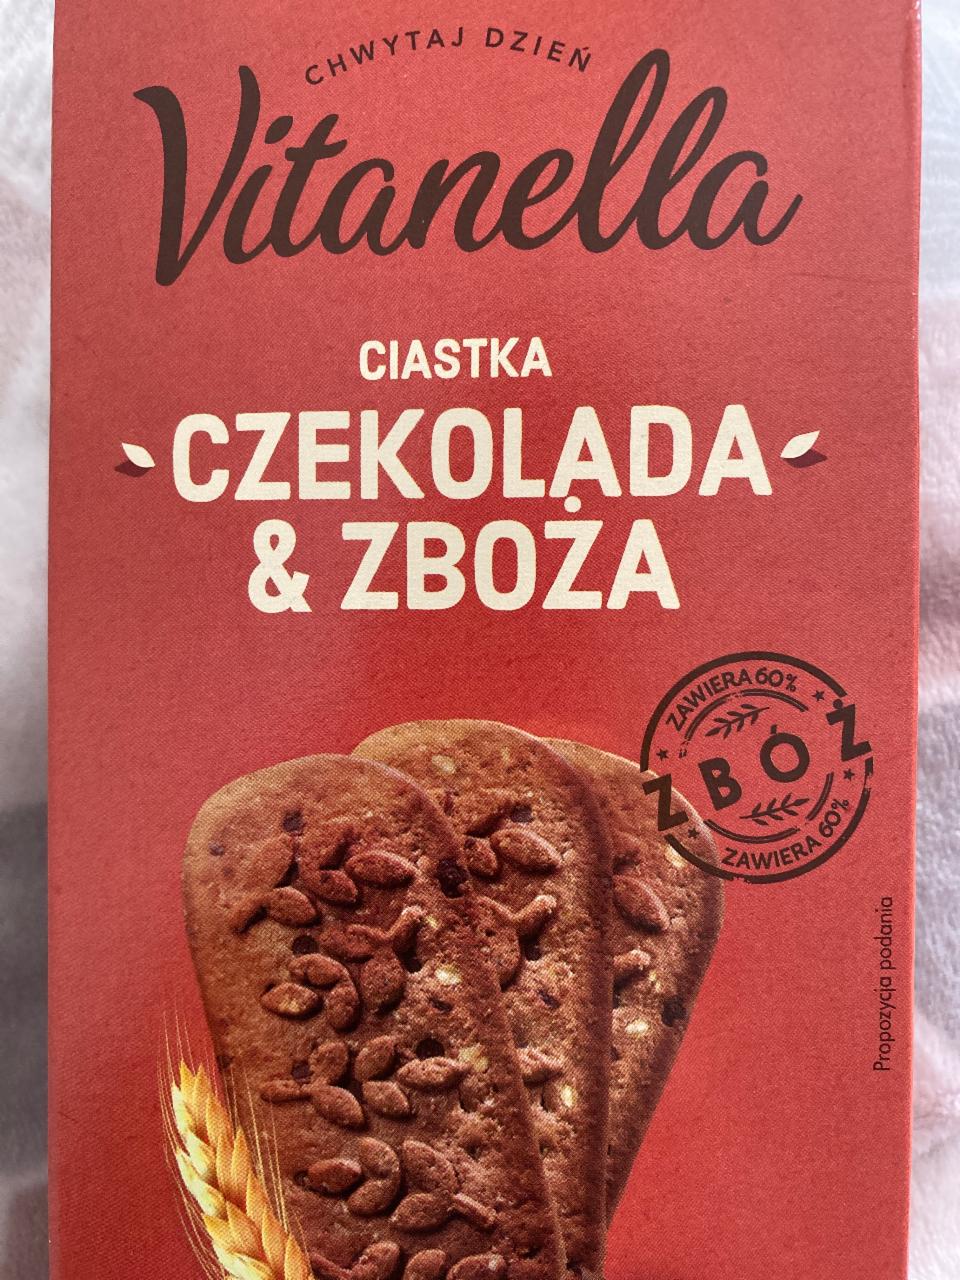 Fotografie - Ciastka czekolada i zboża Vitanella